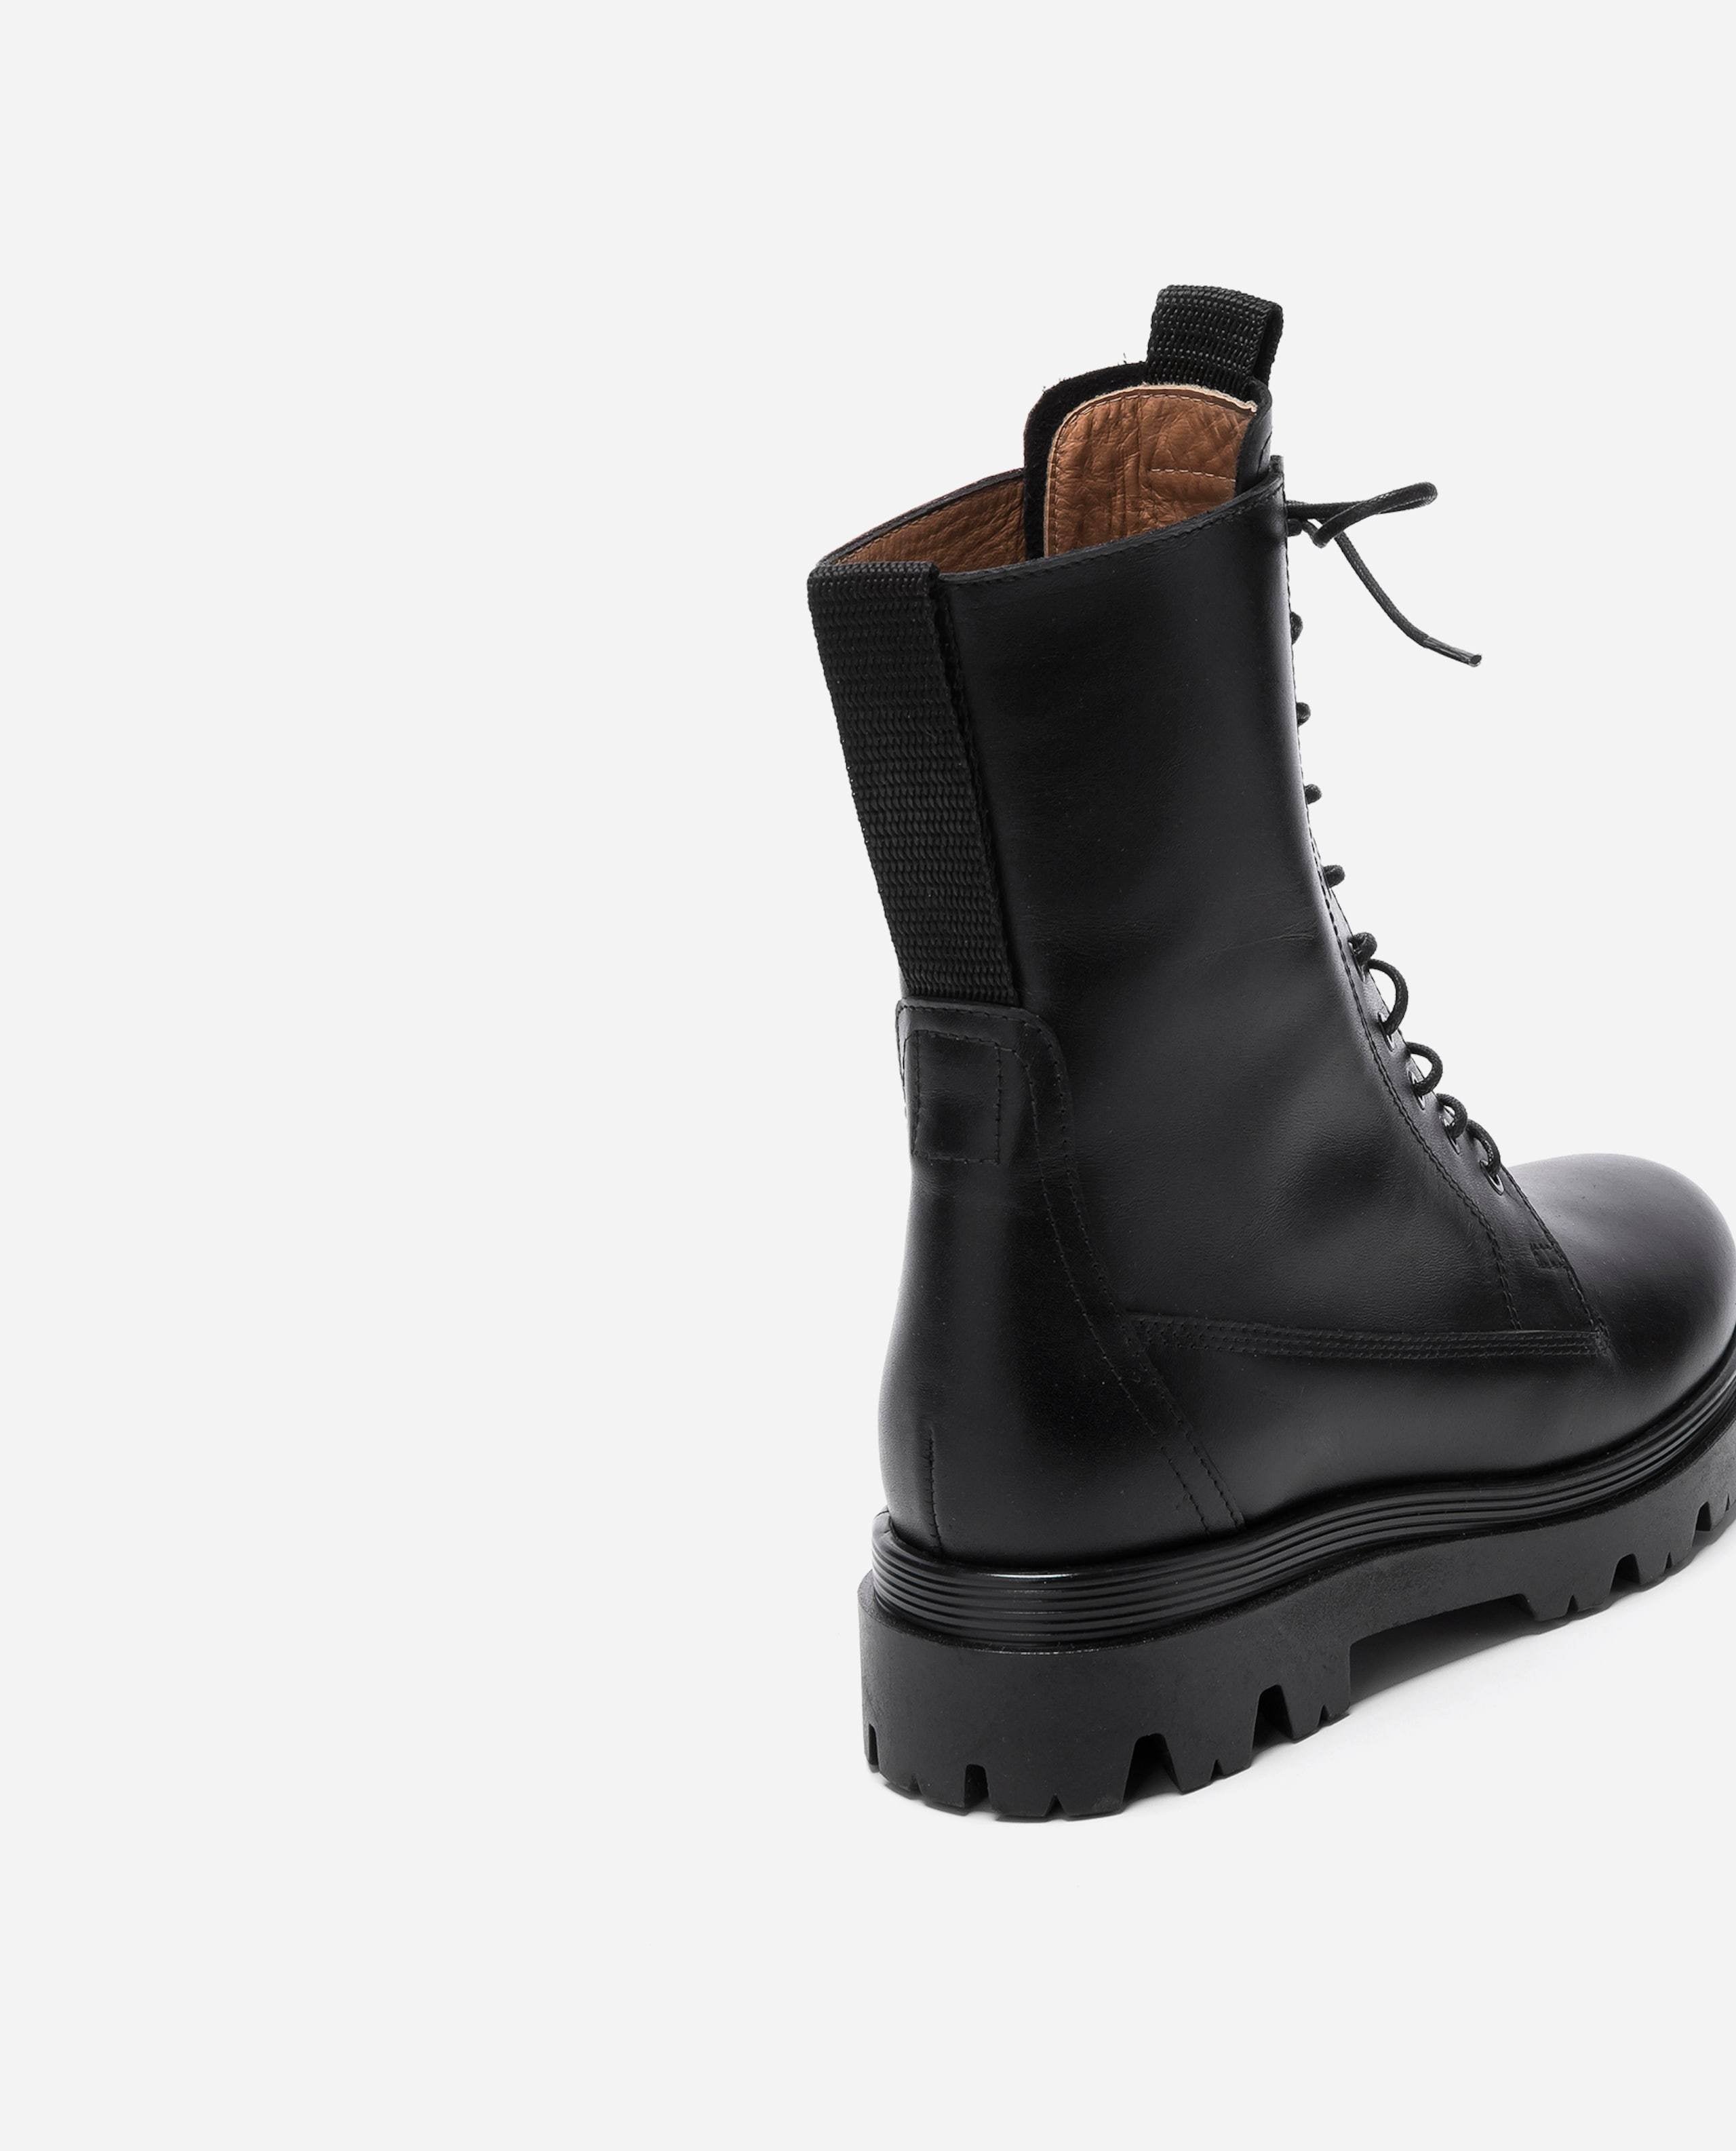 Lovi Black Leather Boots 20020815101-001 - 03